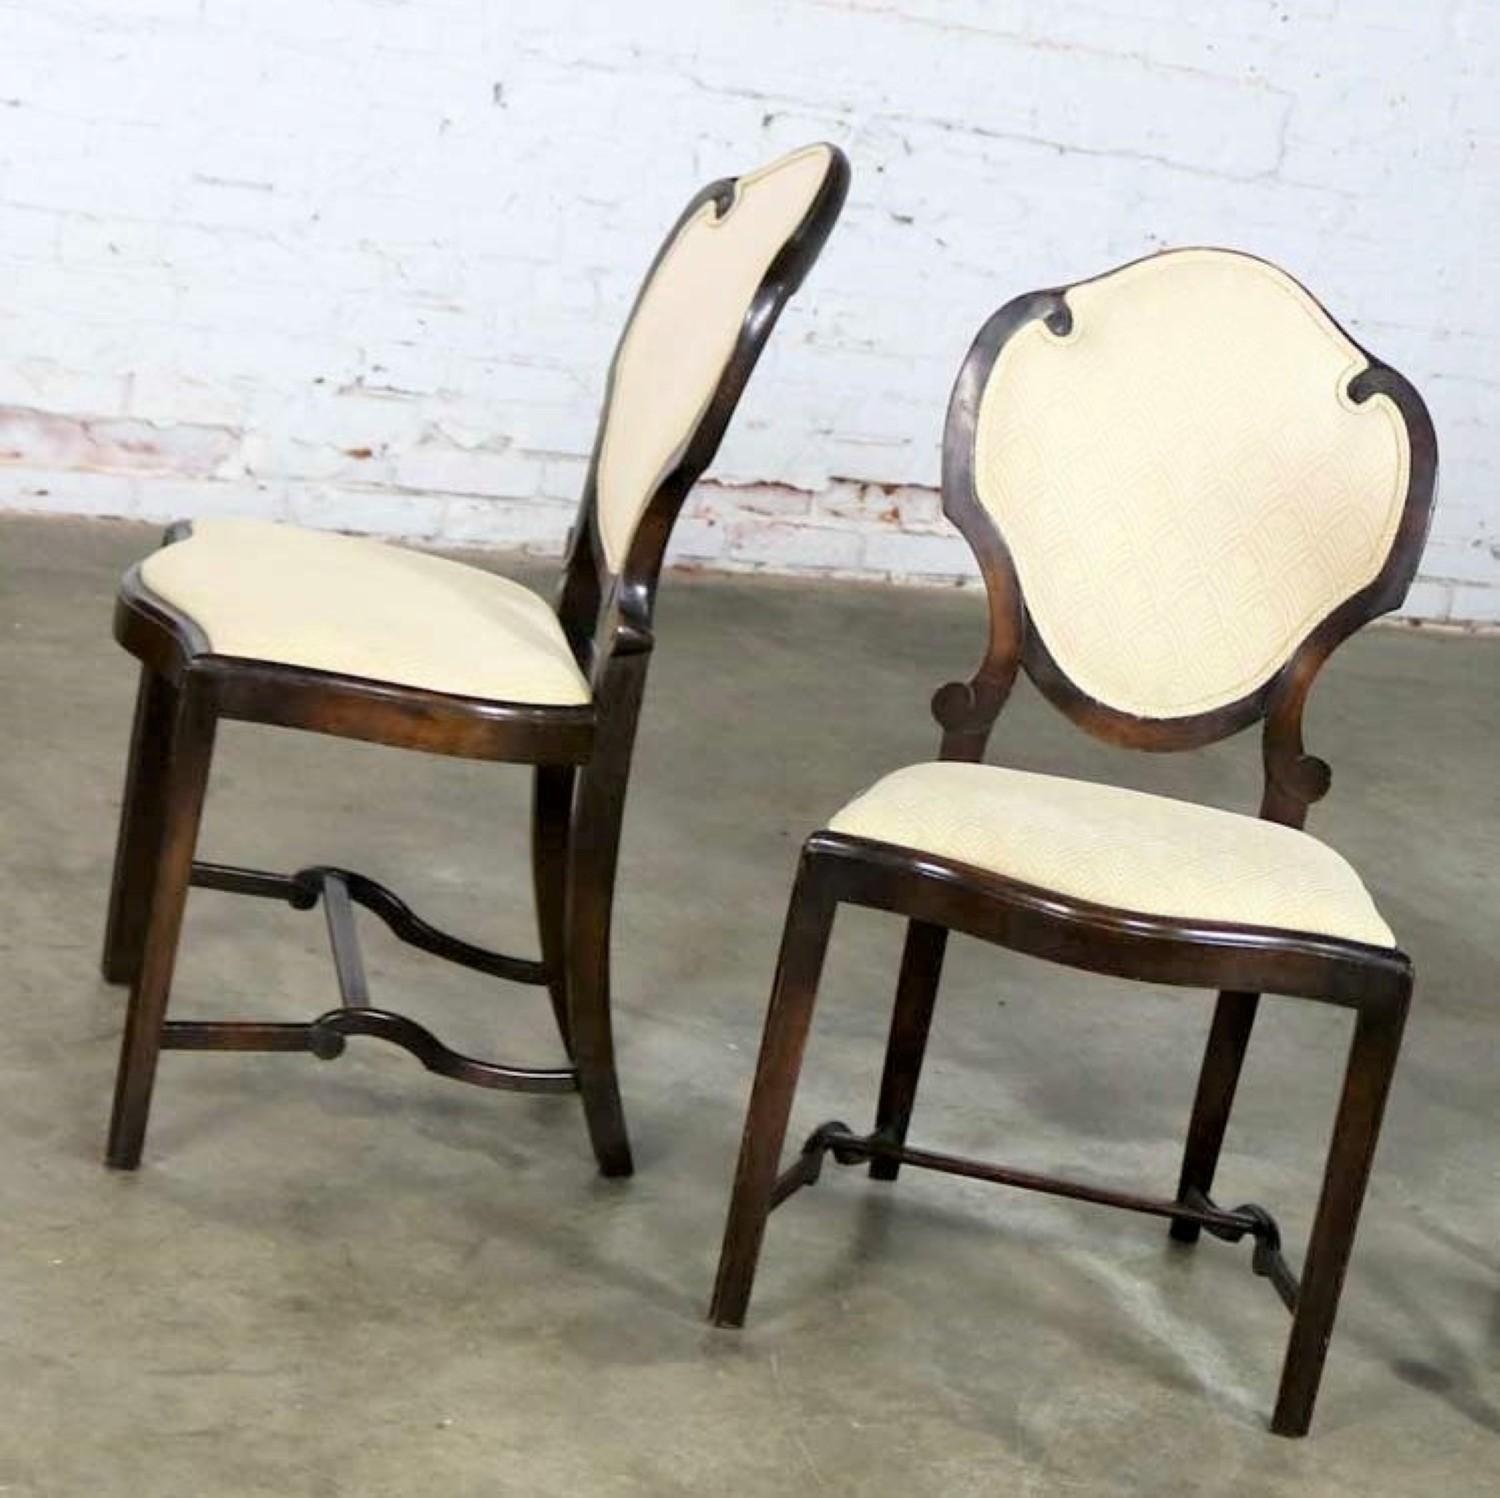 Antique Art Nouveau or Art Deco Shield Back Dining Chairs Set of Four For Sale 2